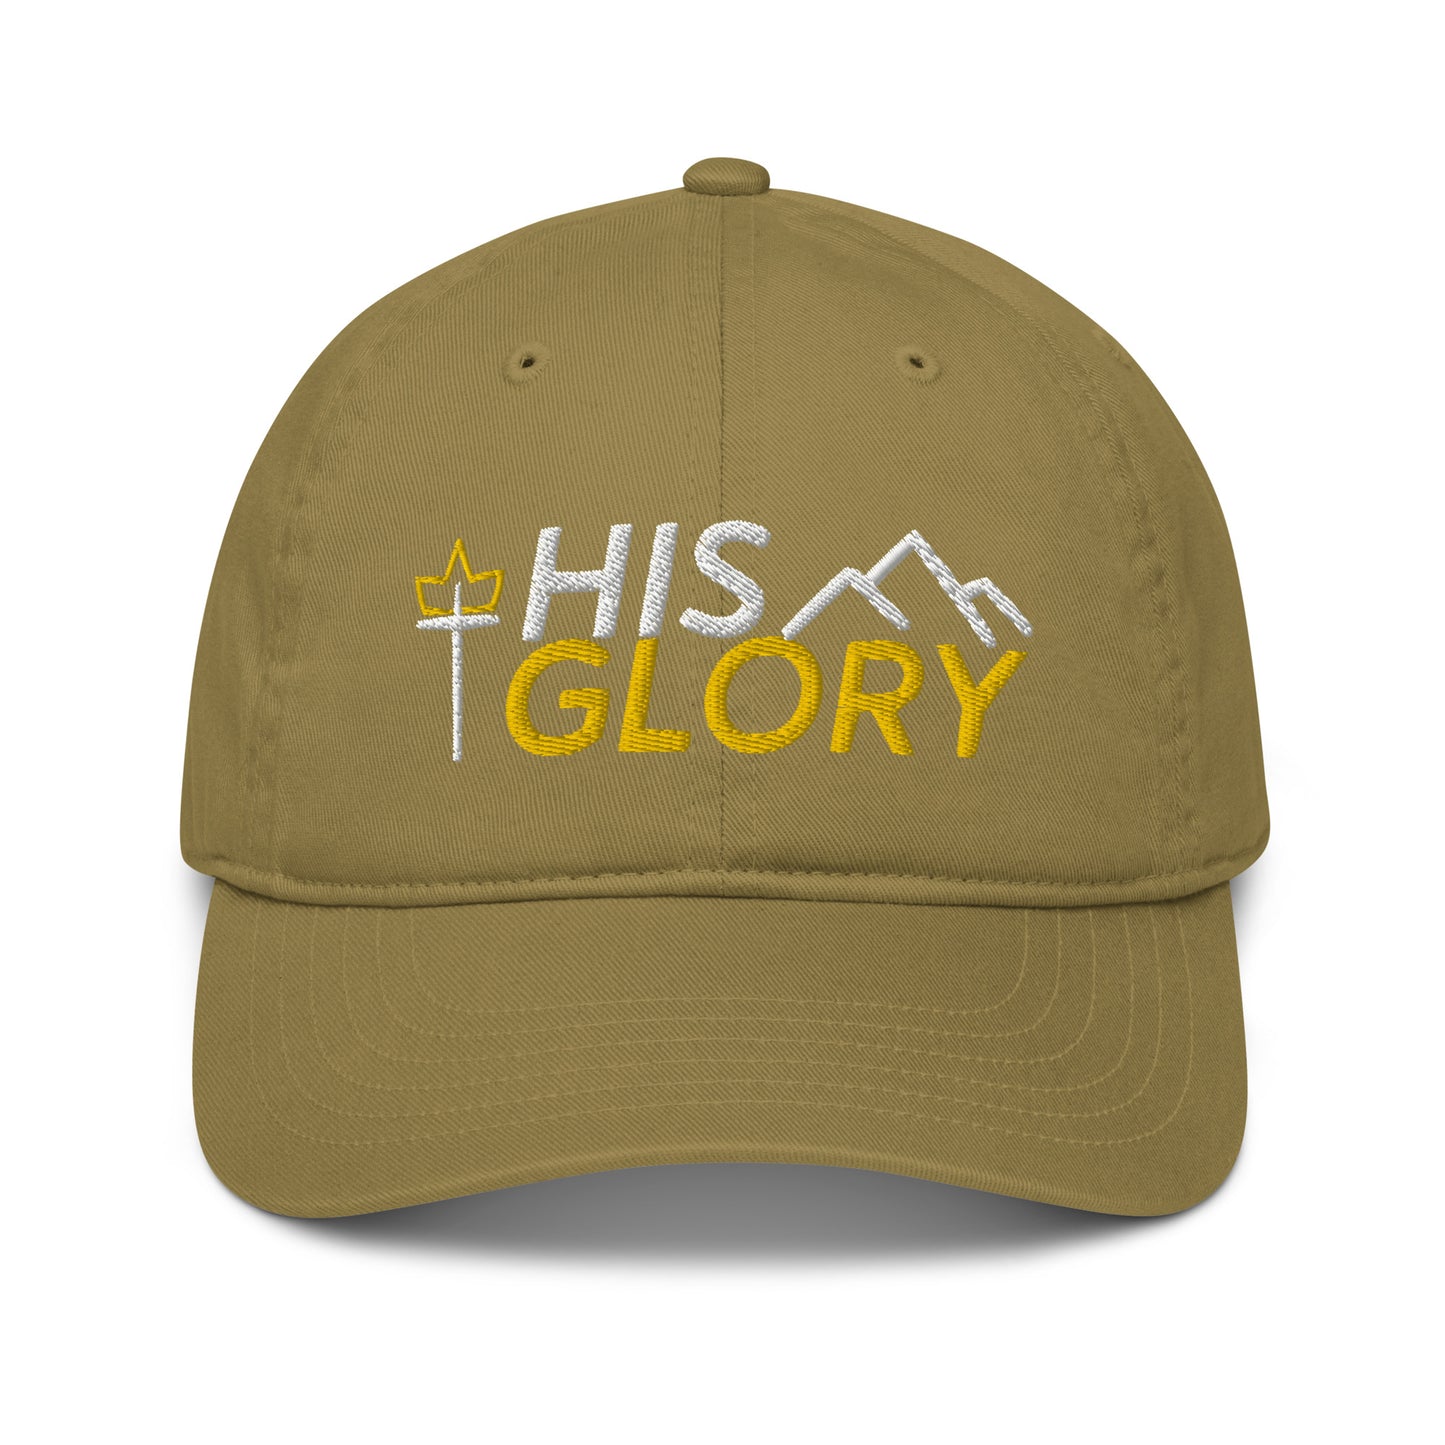 His Glory 3.0 - NEW - Organic dad hat